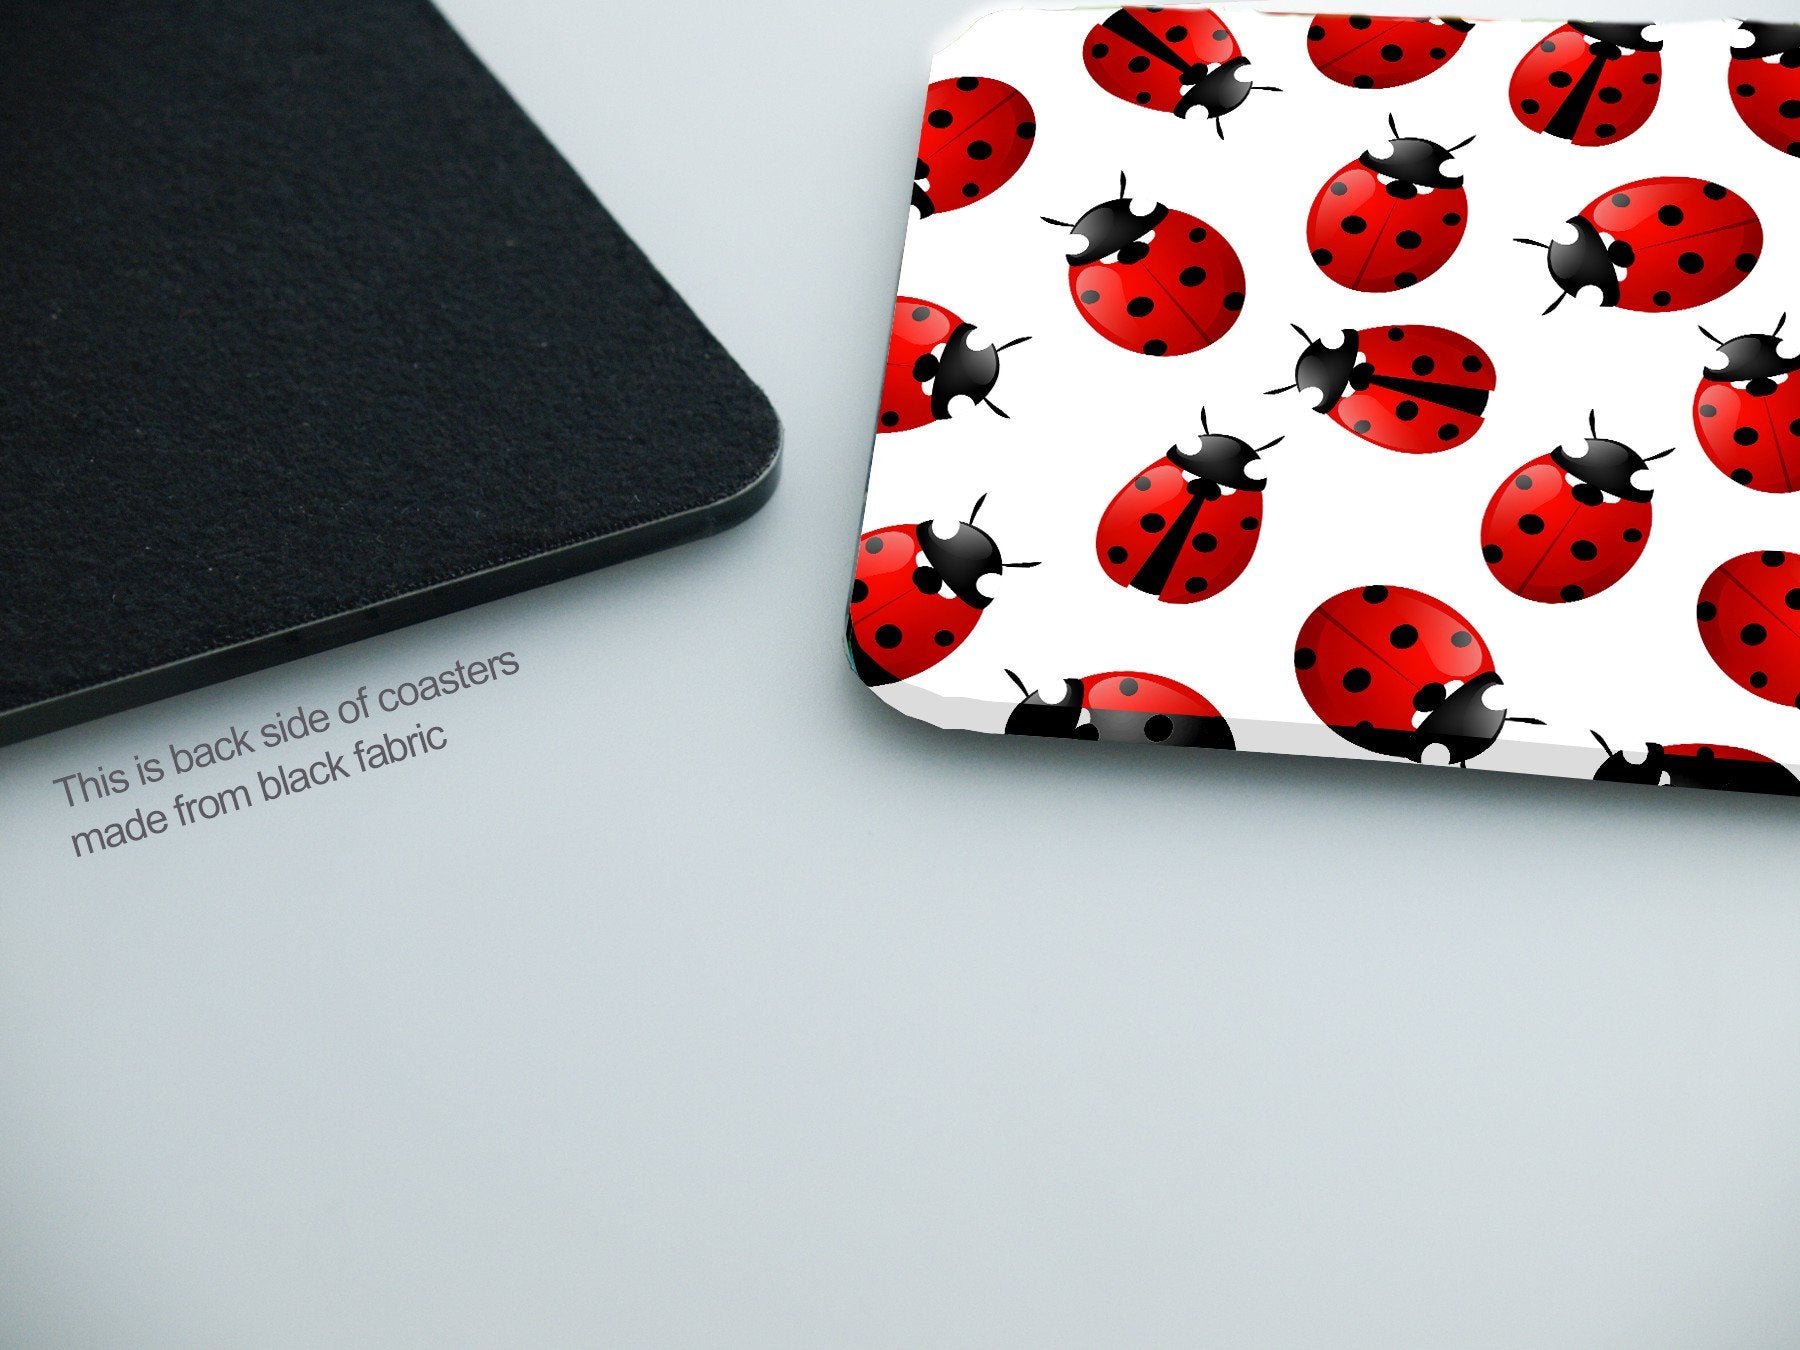 Untersetzer - Ladybug Color CO010 - life-decor.de